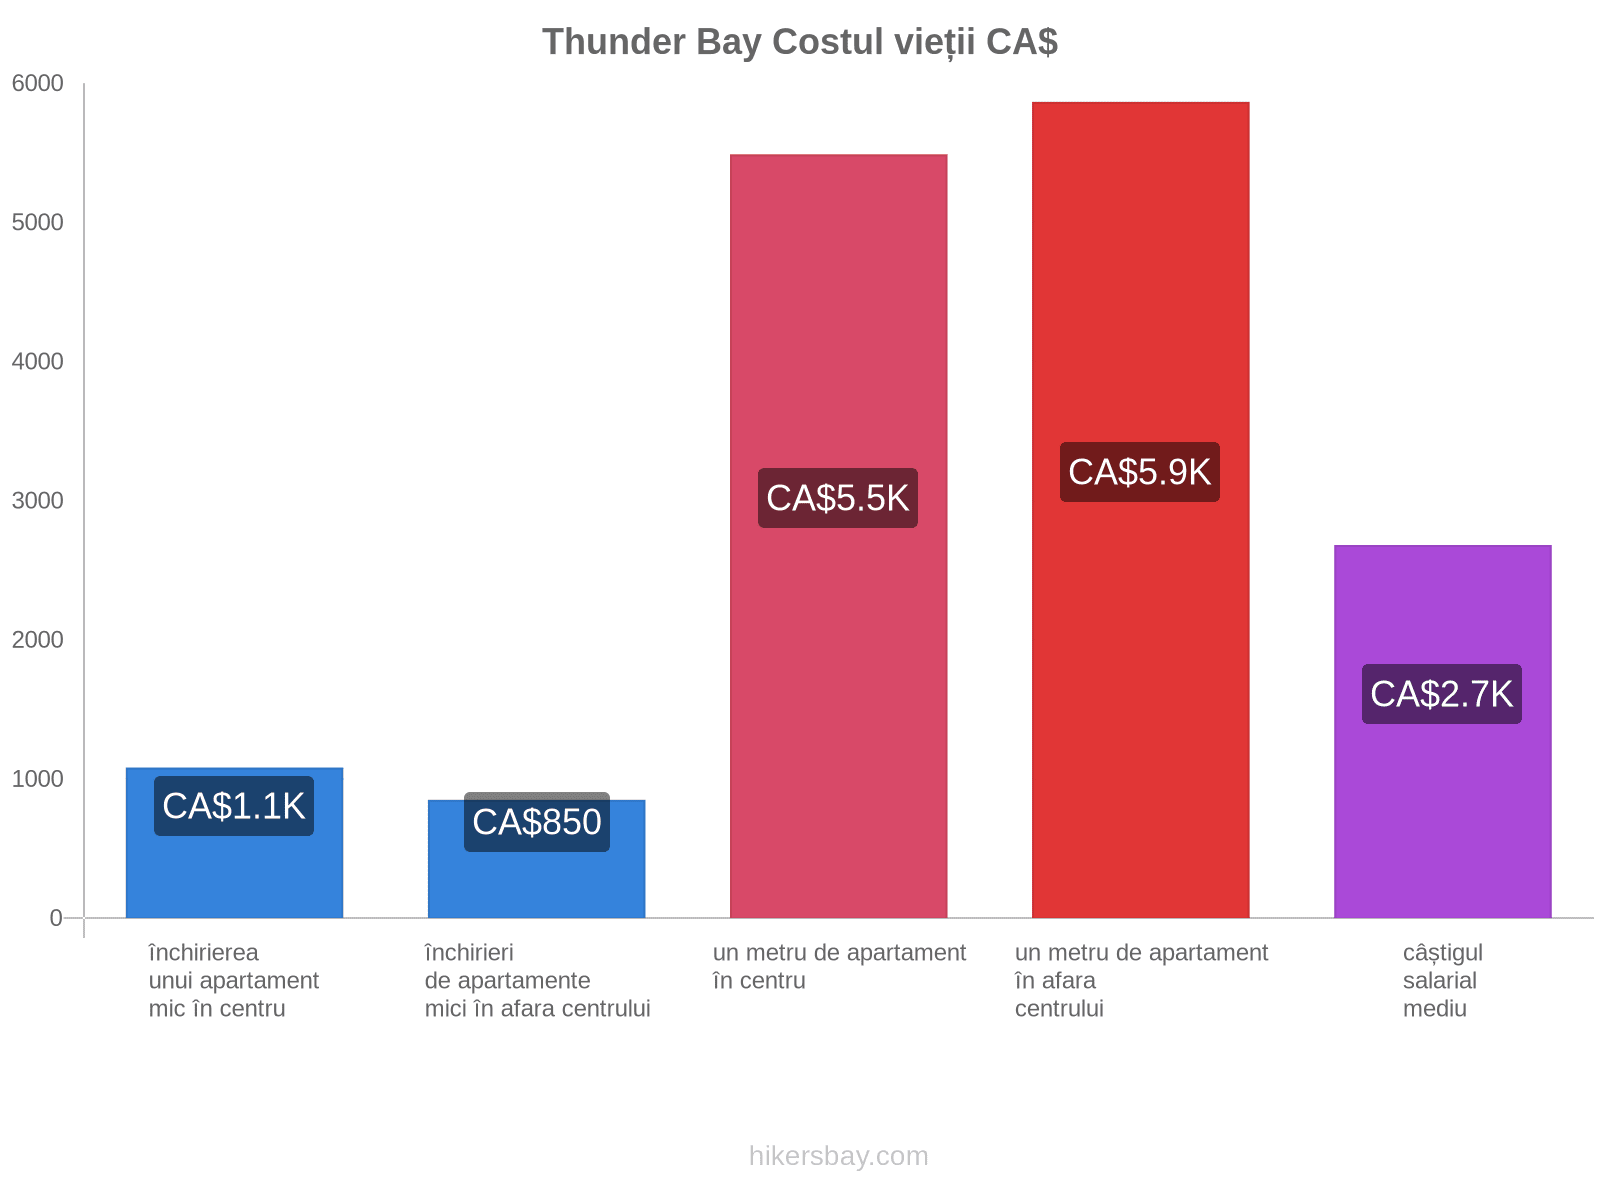 Thunder Bay costul vieții hikersbay.com